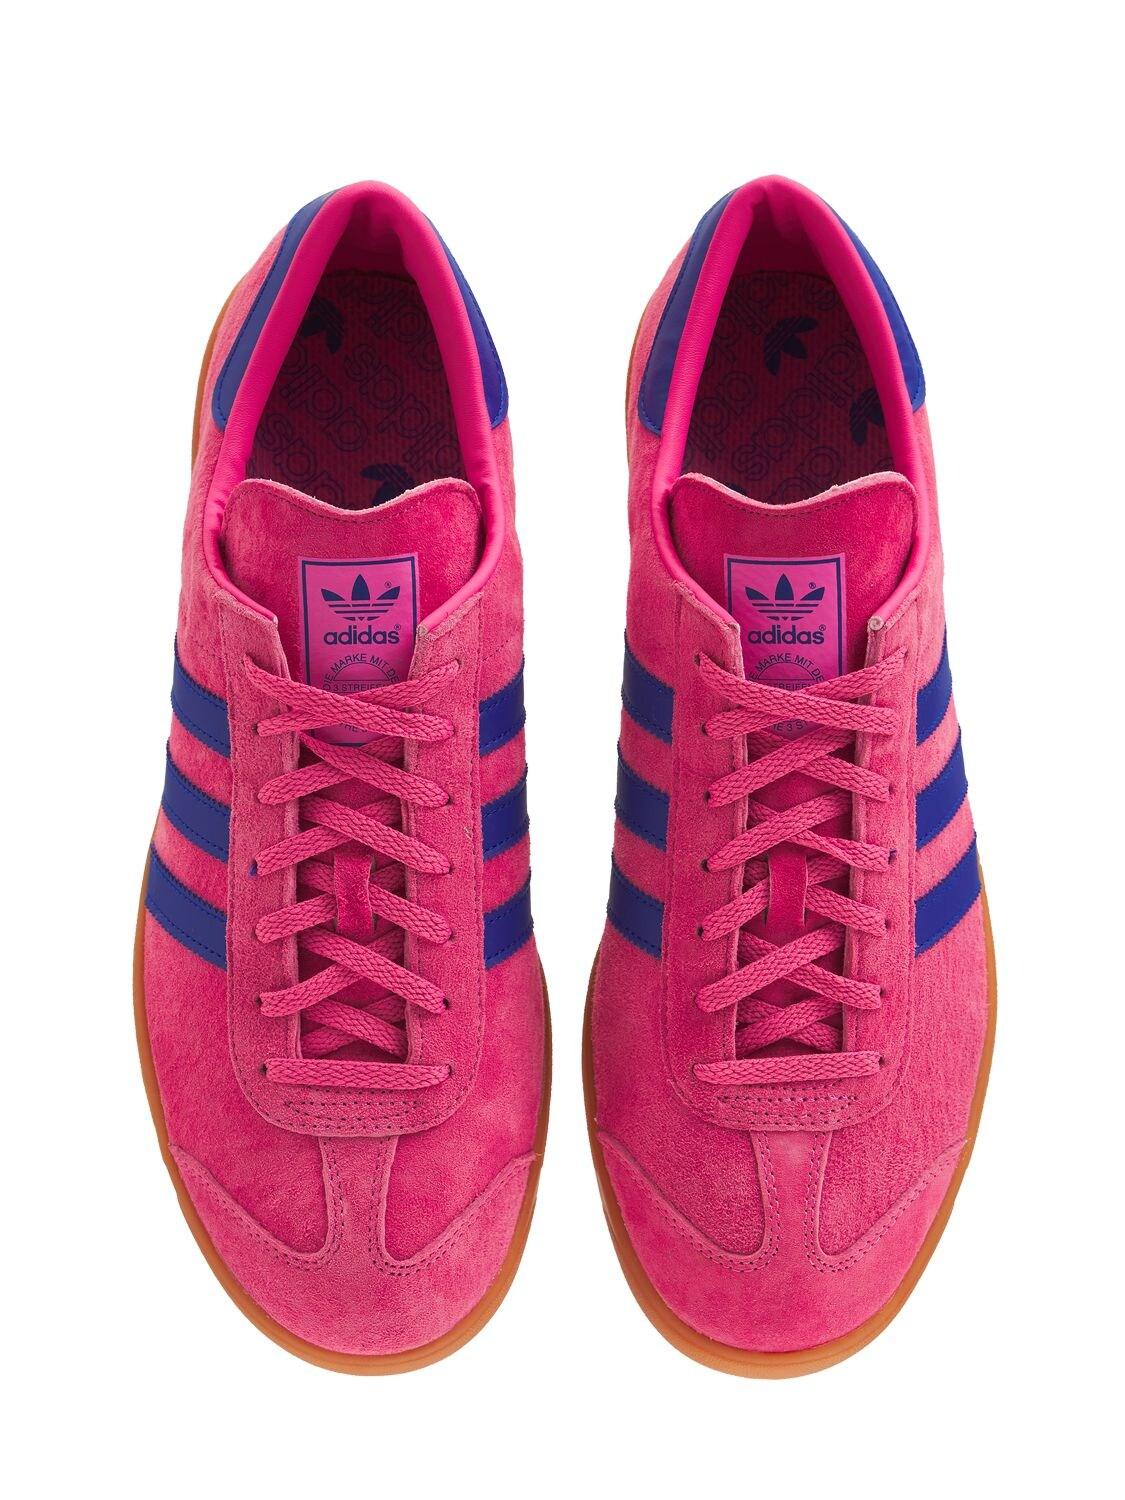 adidas Originals Hamburg Sneakers in Pink for Men | Lyst